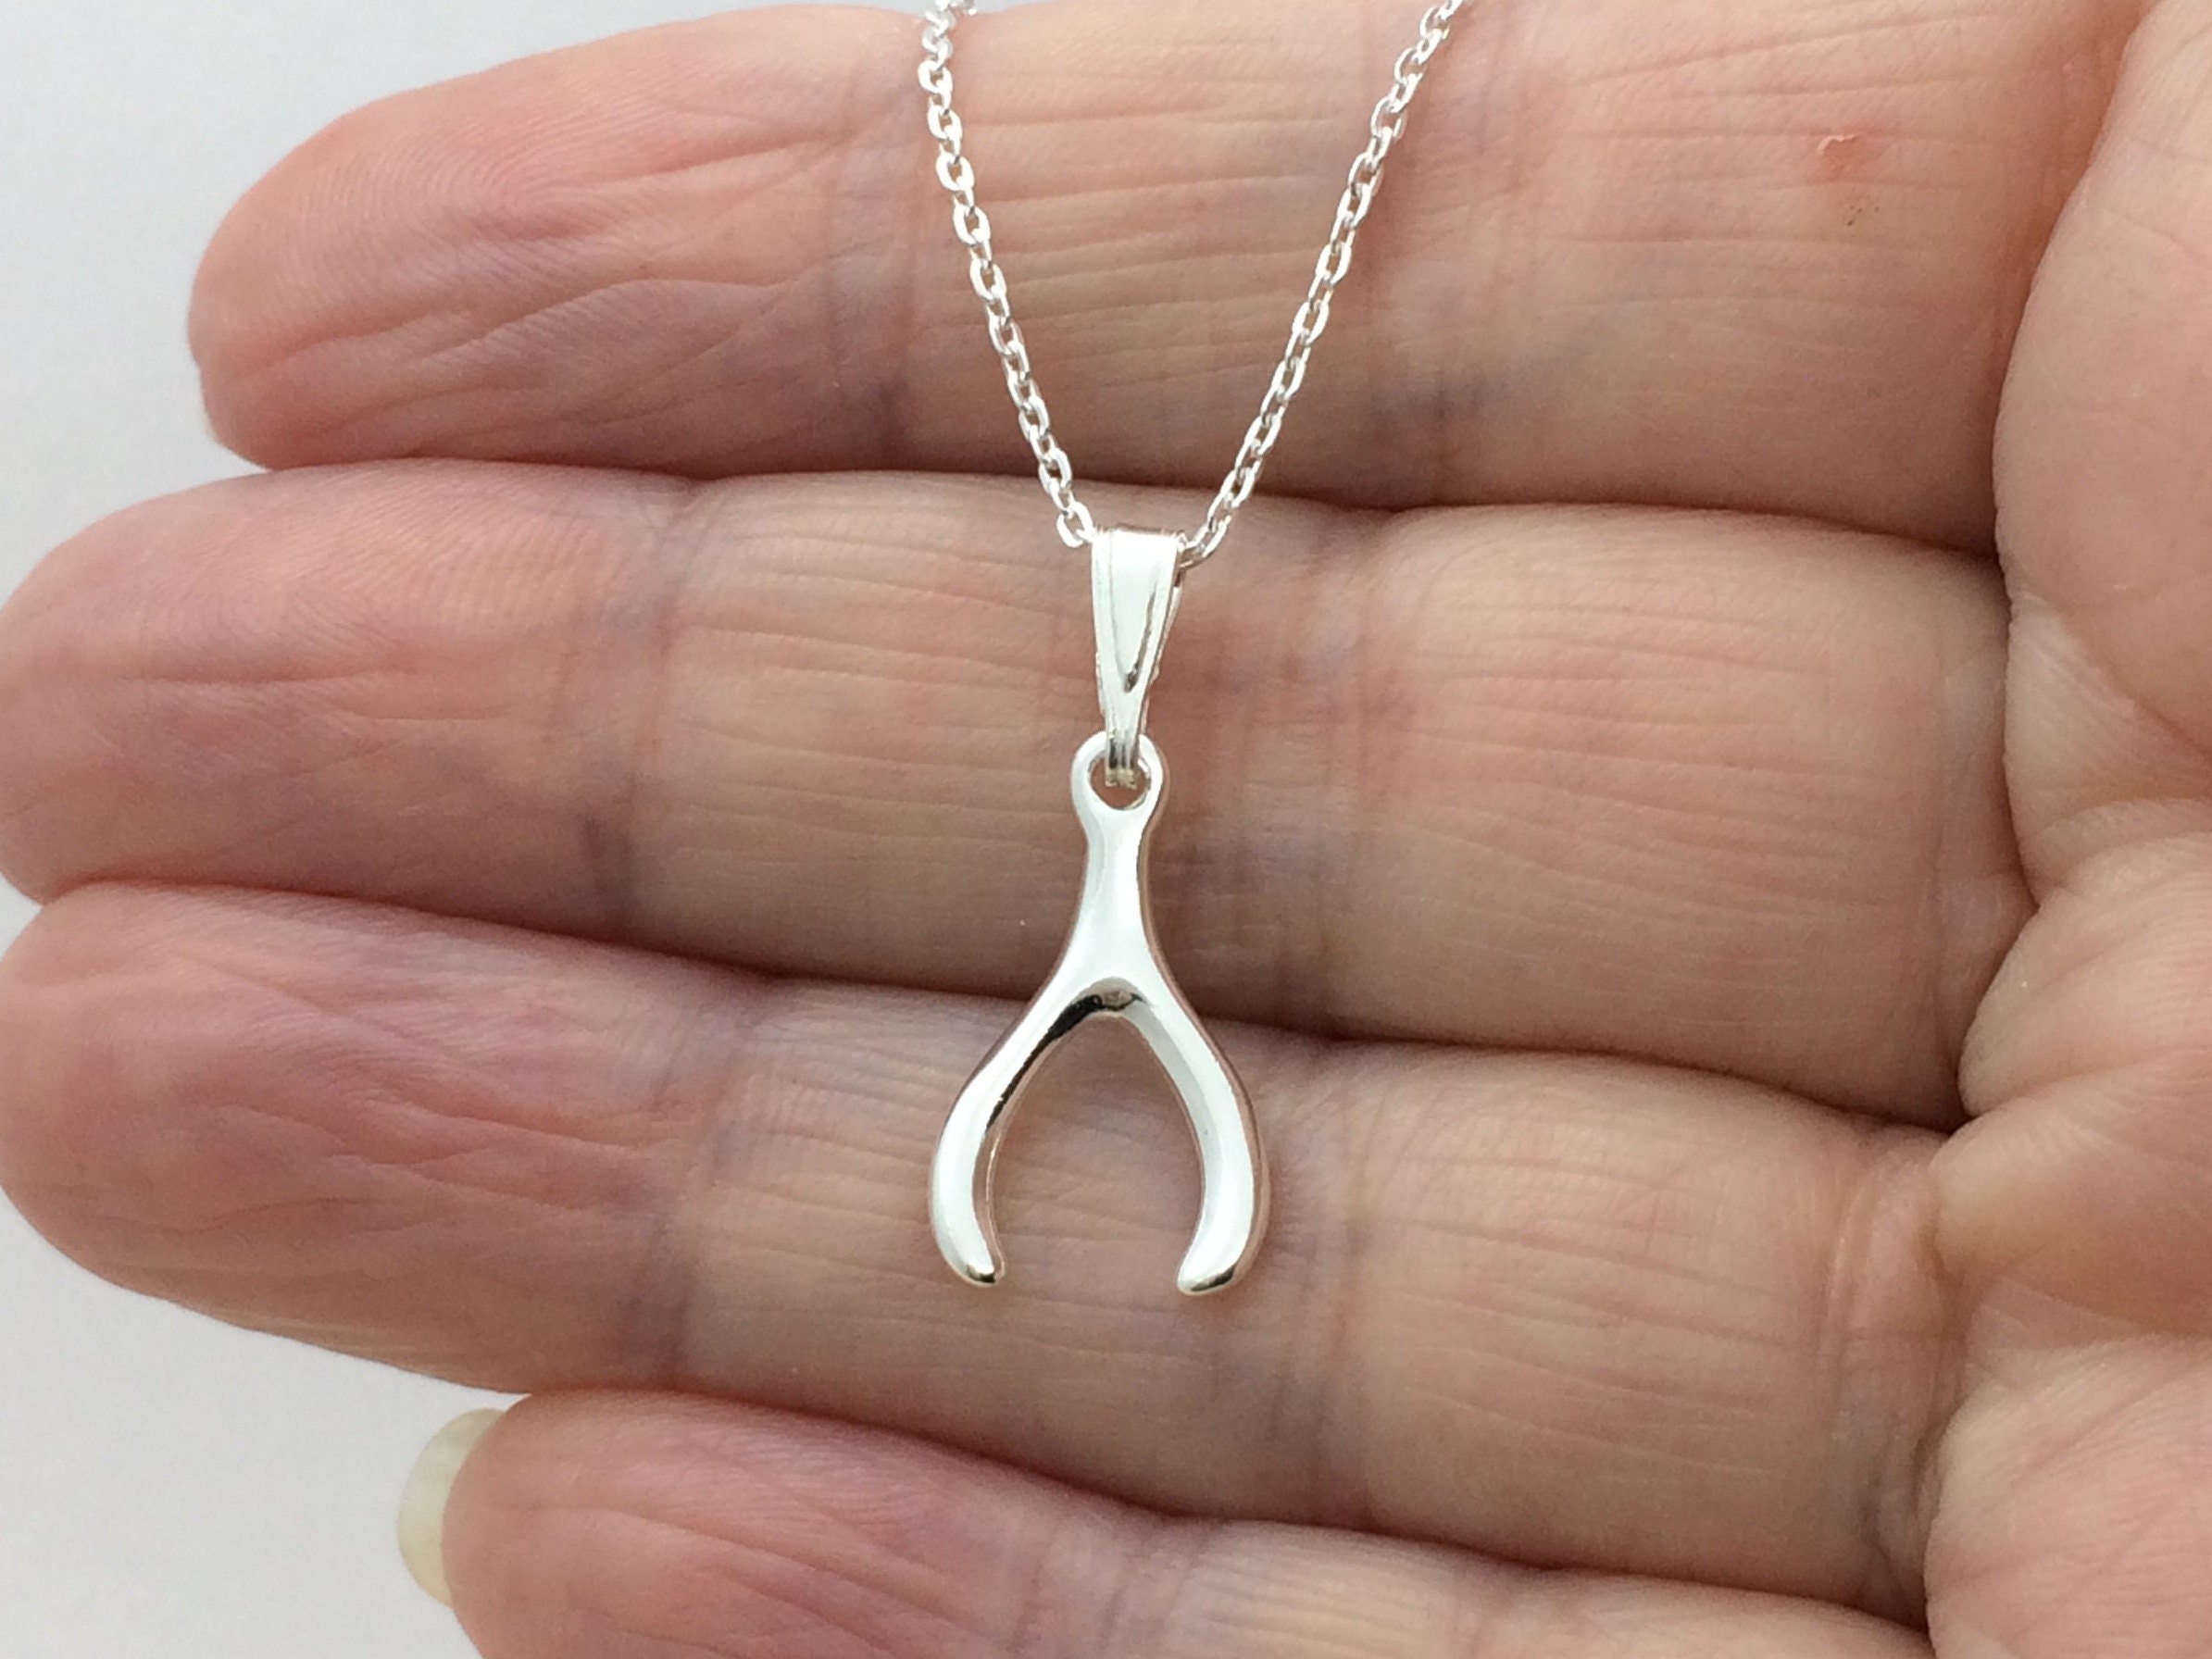 Sterling Silver Wishbone Necklace, Sterling silver chain - wishbone pendant.  | eBay